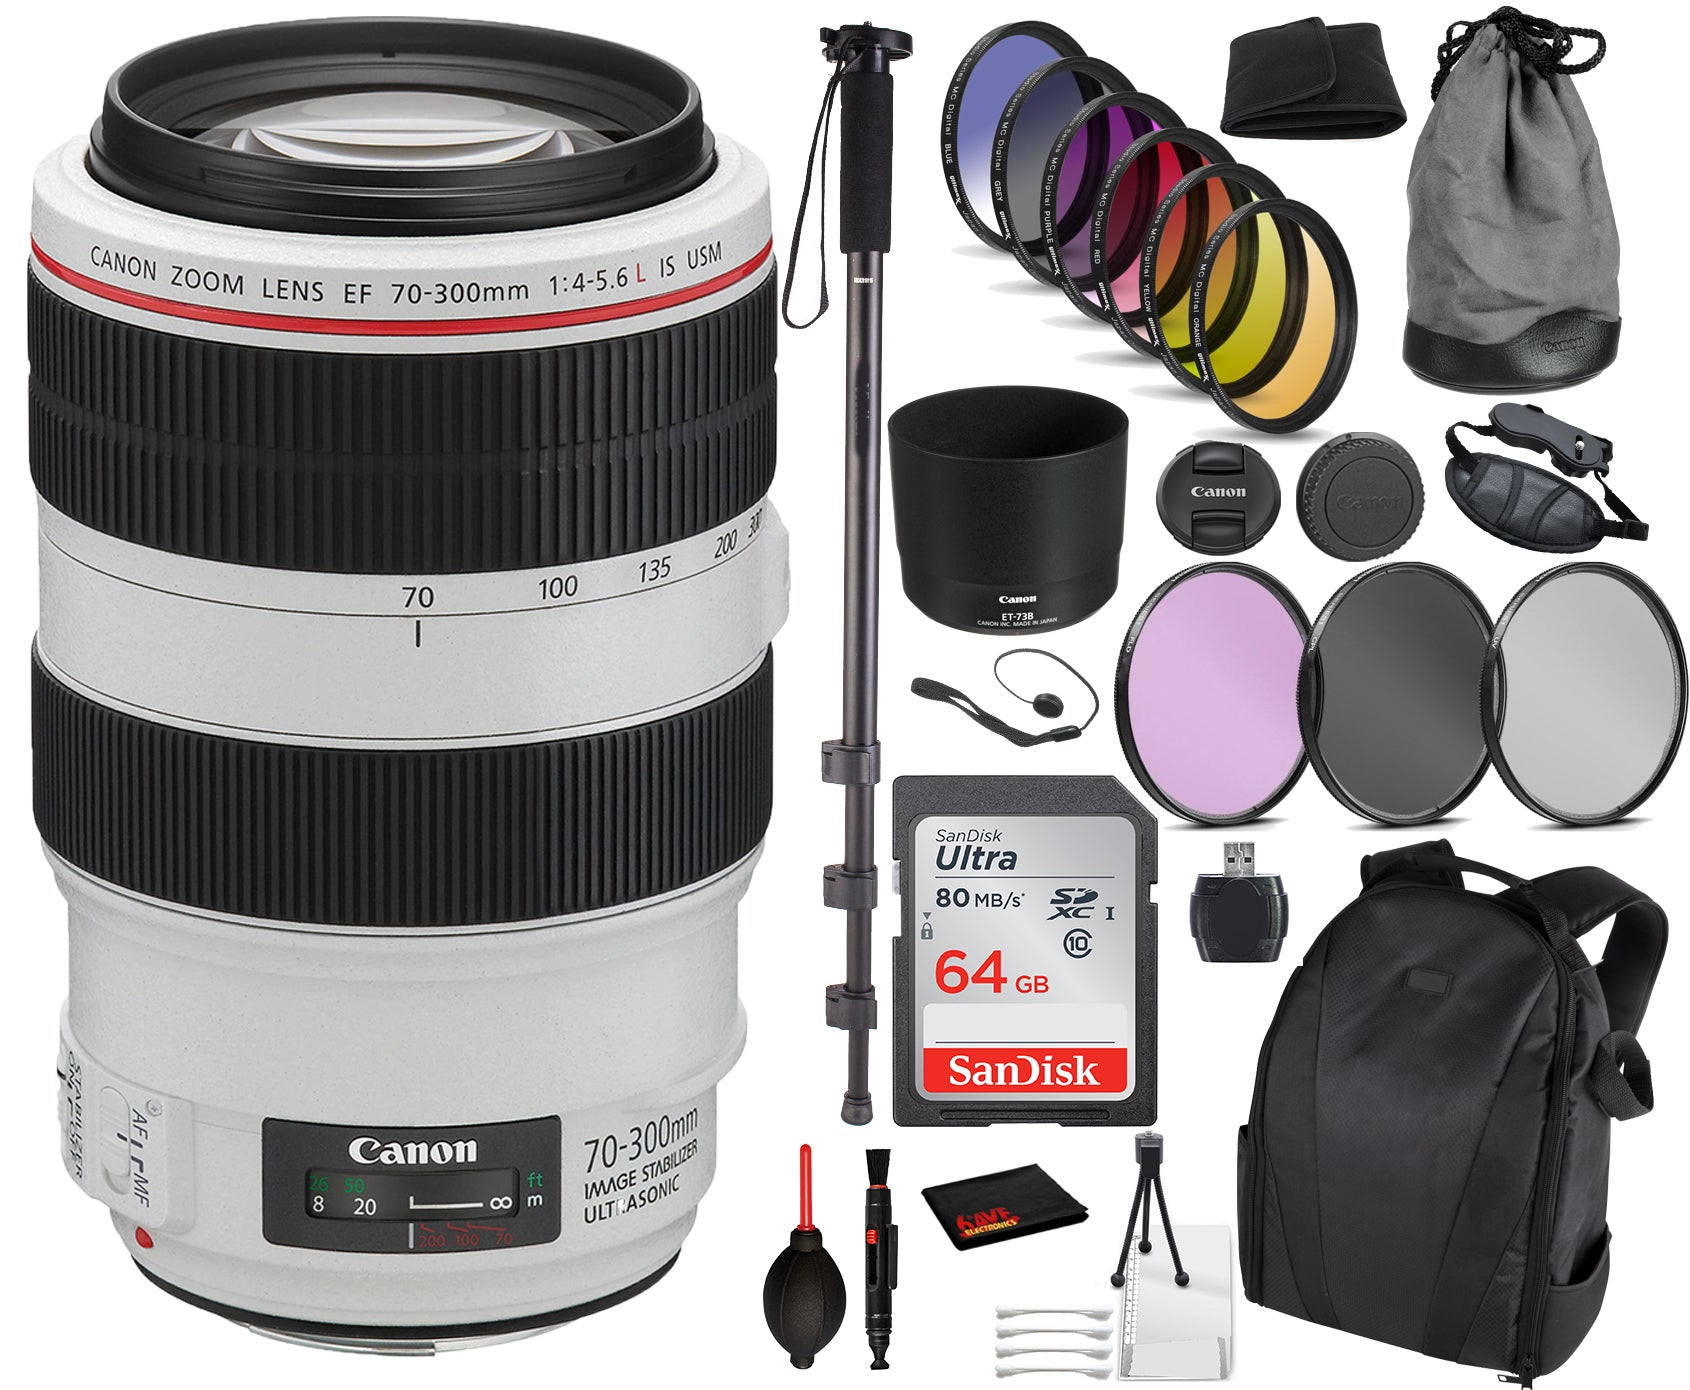 Canon EF 70-300mm f/4-5.6L IS USM Lens Essential Bundle Kit for Canon EOS - International Model No Warranty